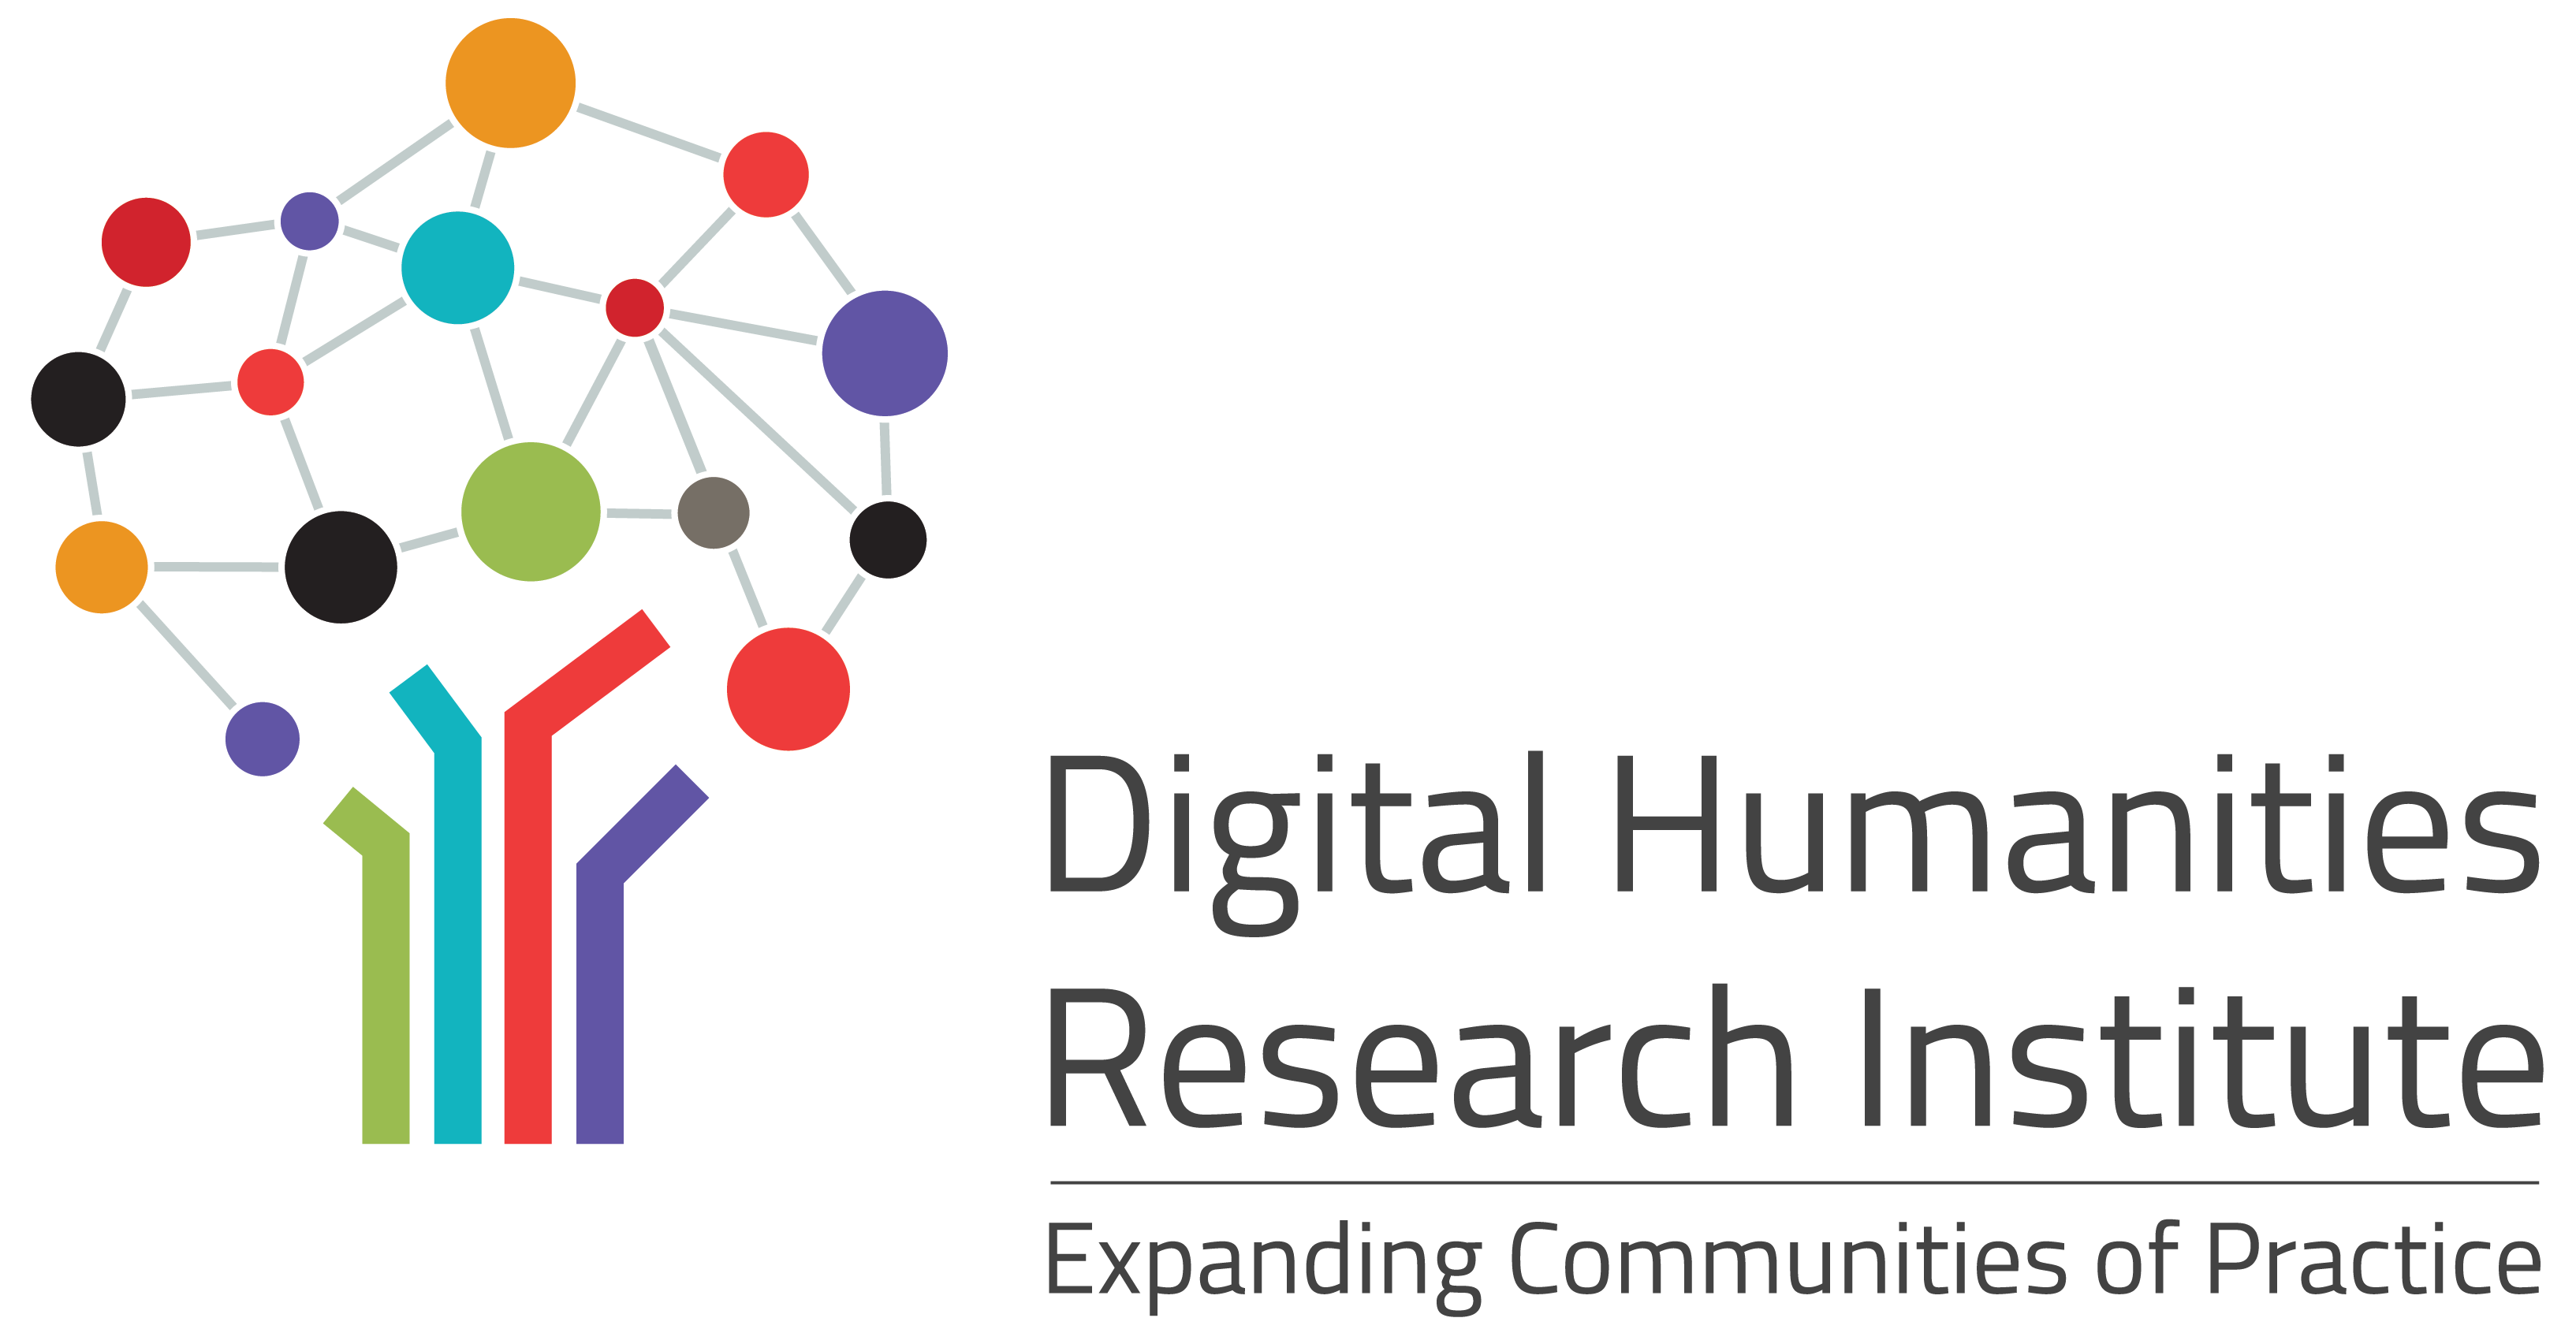 Digital Humanities Research Institute network